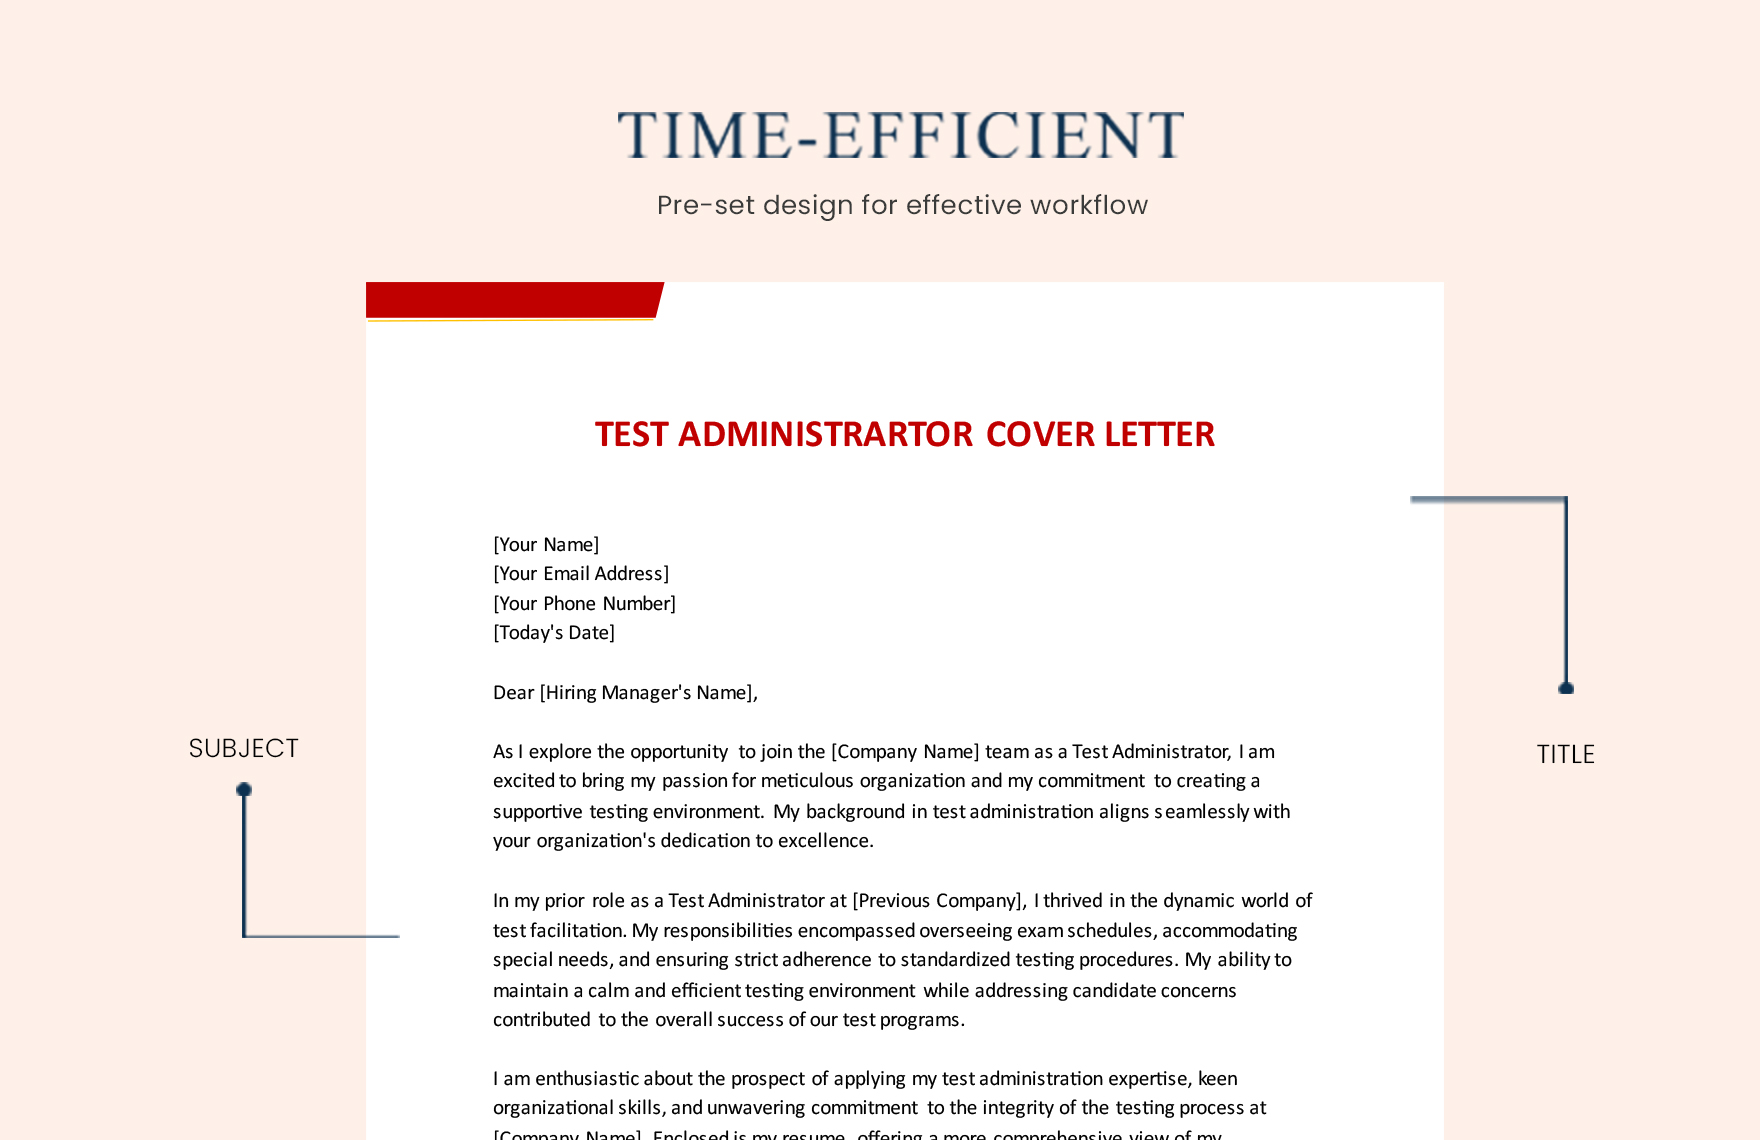 Test Administrator Cover Letter